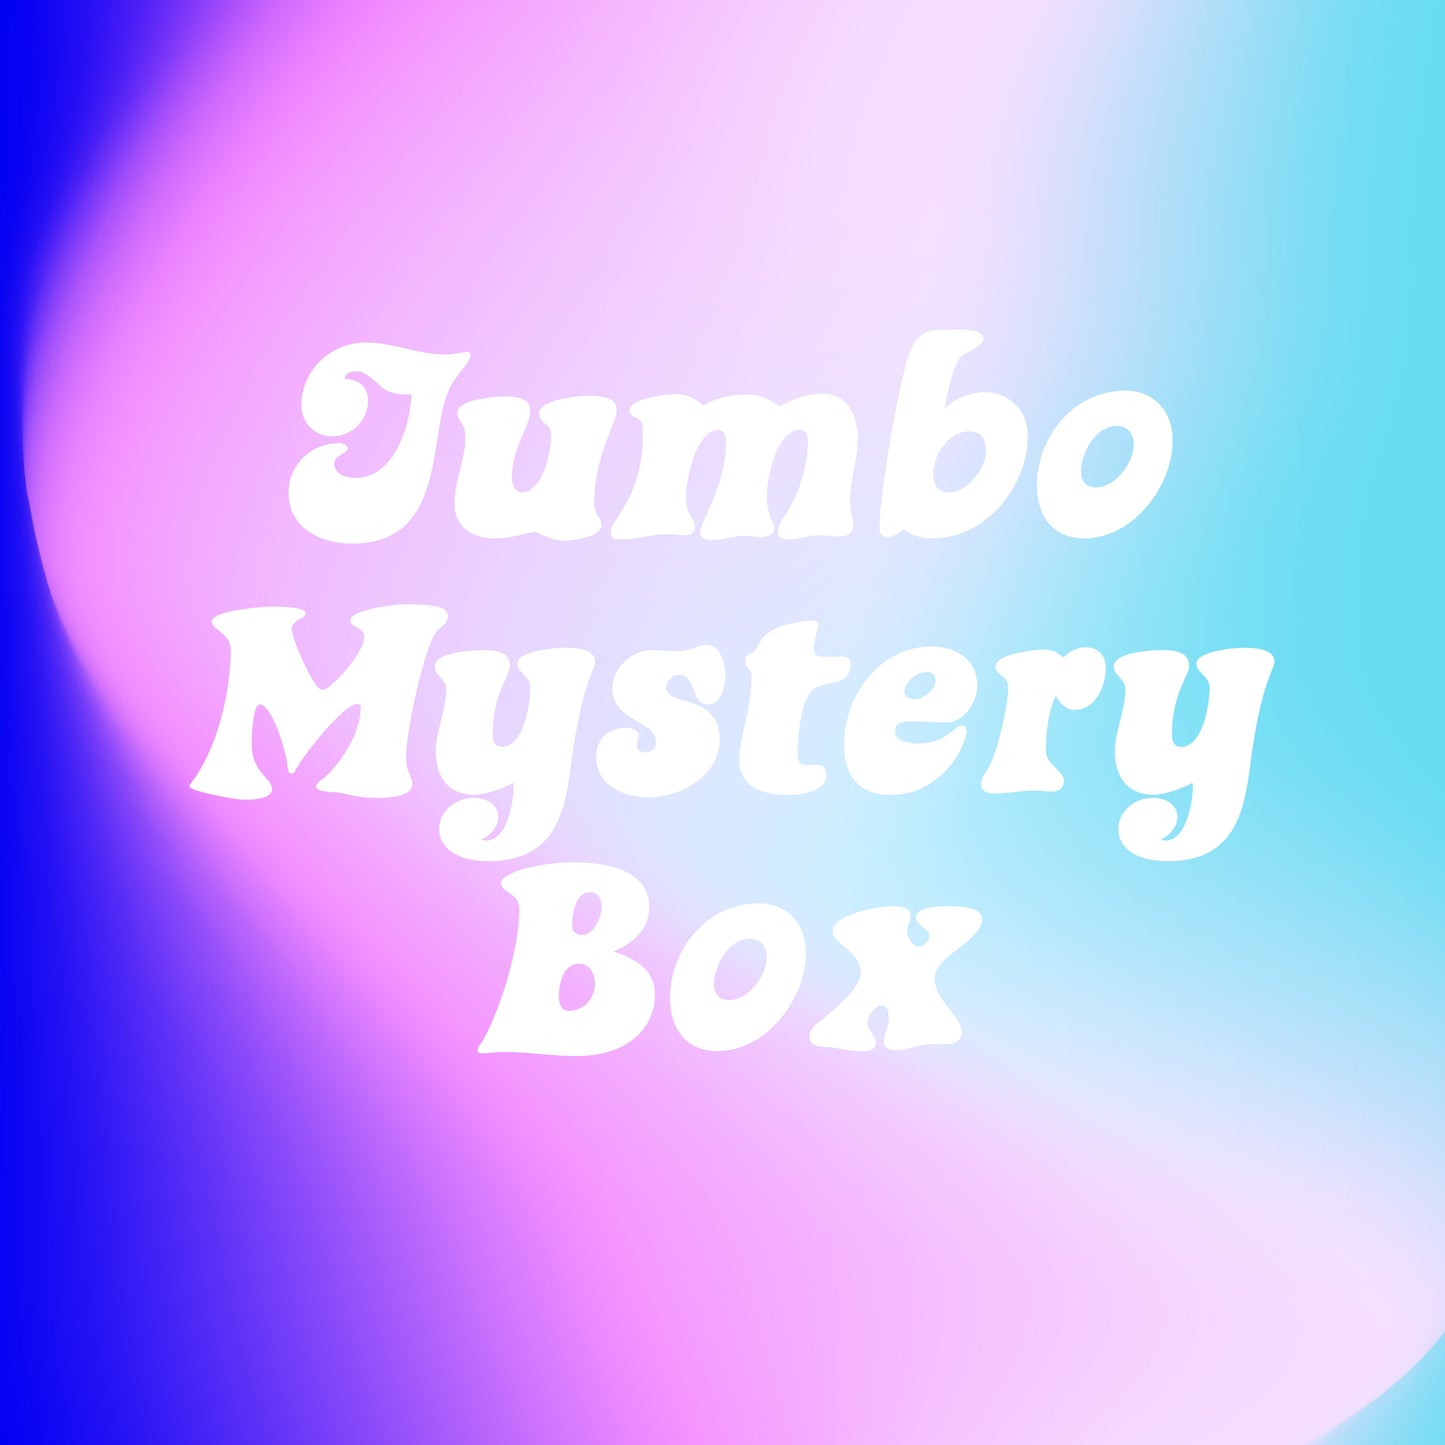 Jumbo Mystery Box